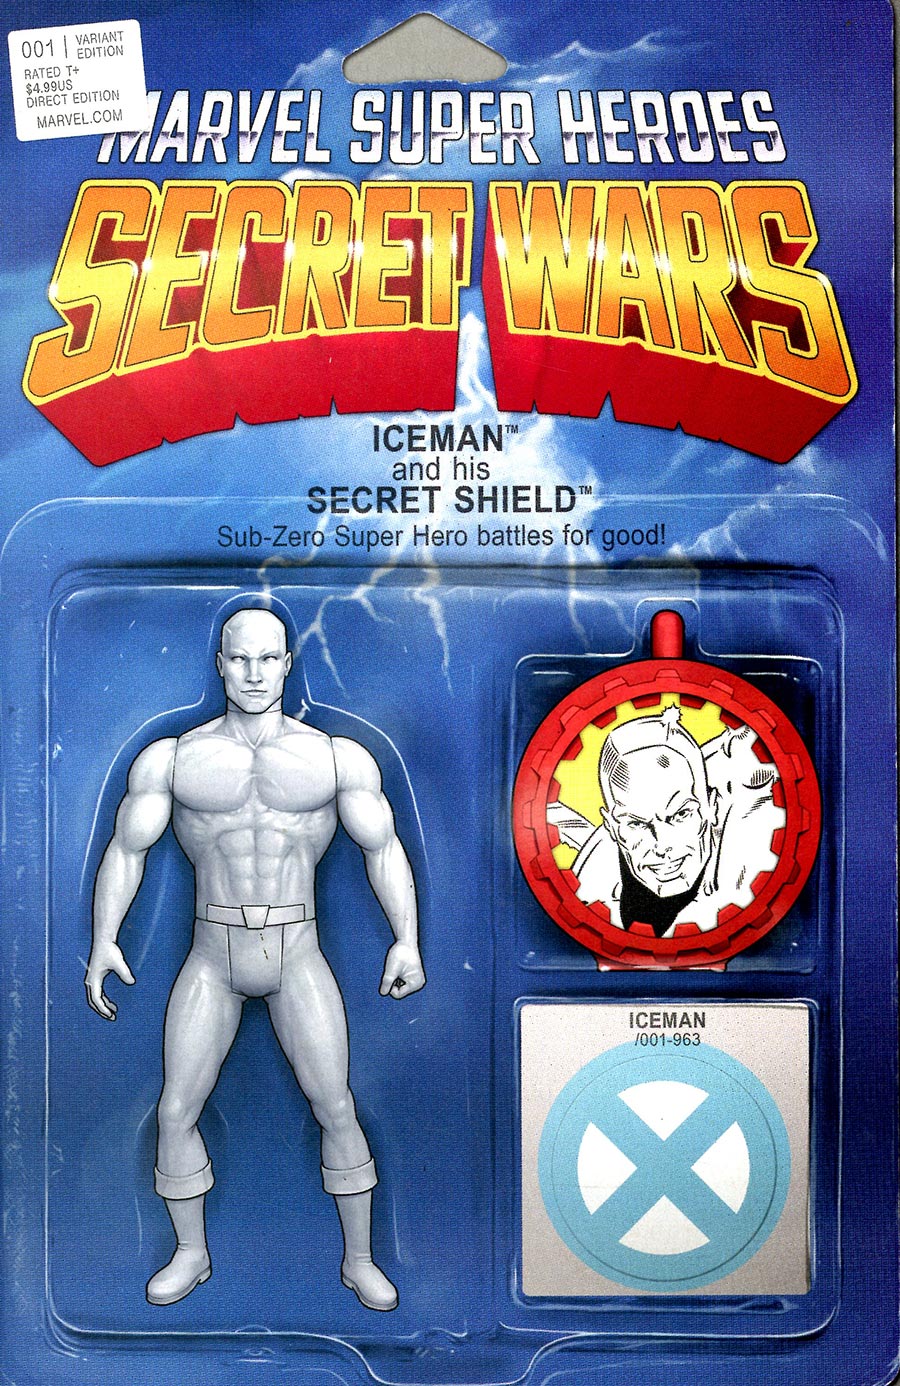 Marvel Super Heroes Secret Wars Battleworld #1 Cover F Variant John Tyler Christopher Action Figure Cover